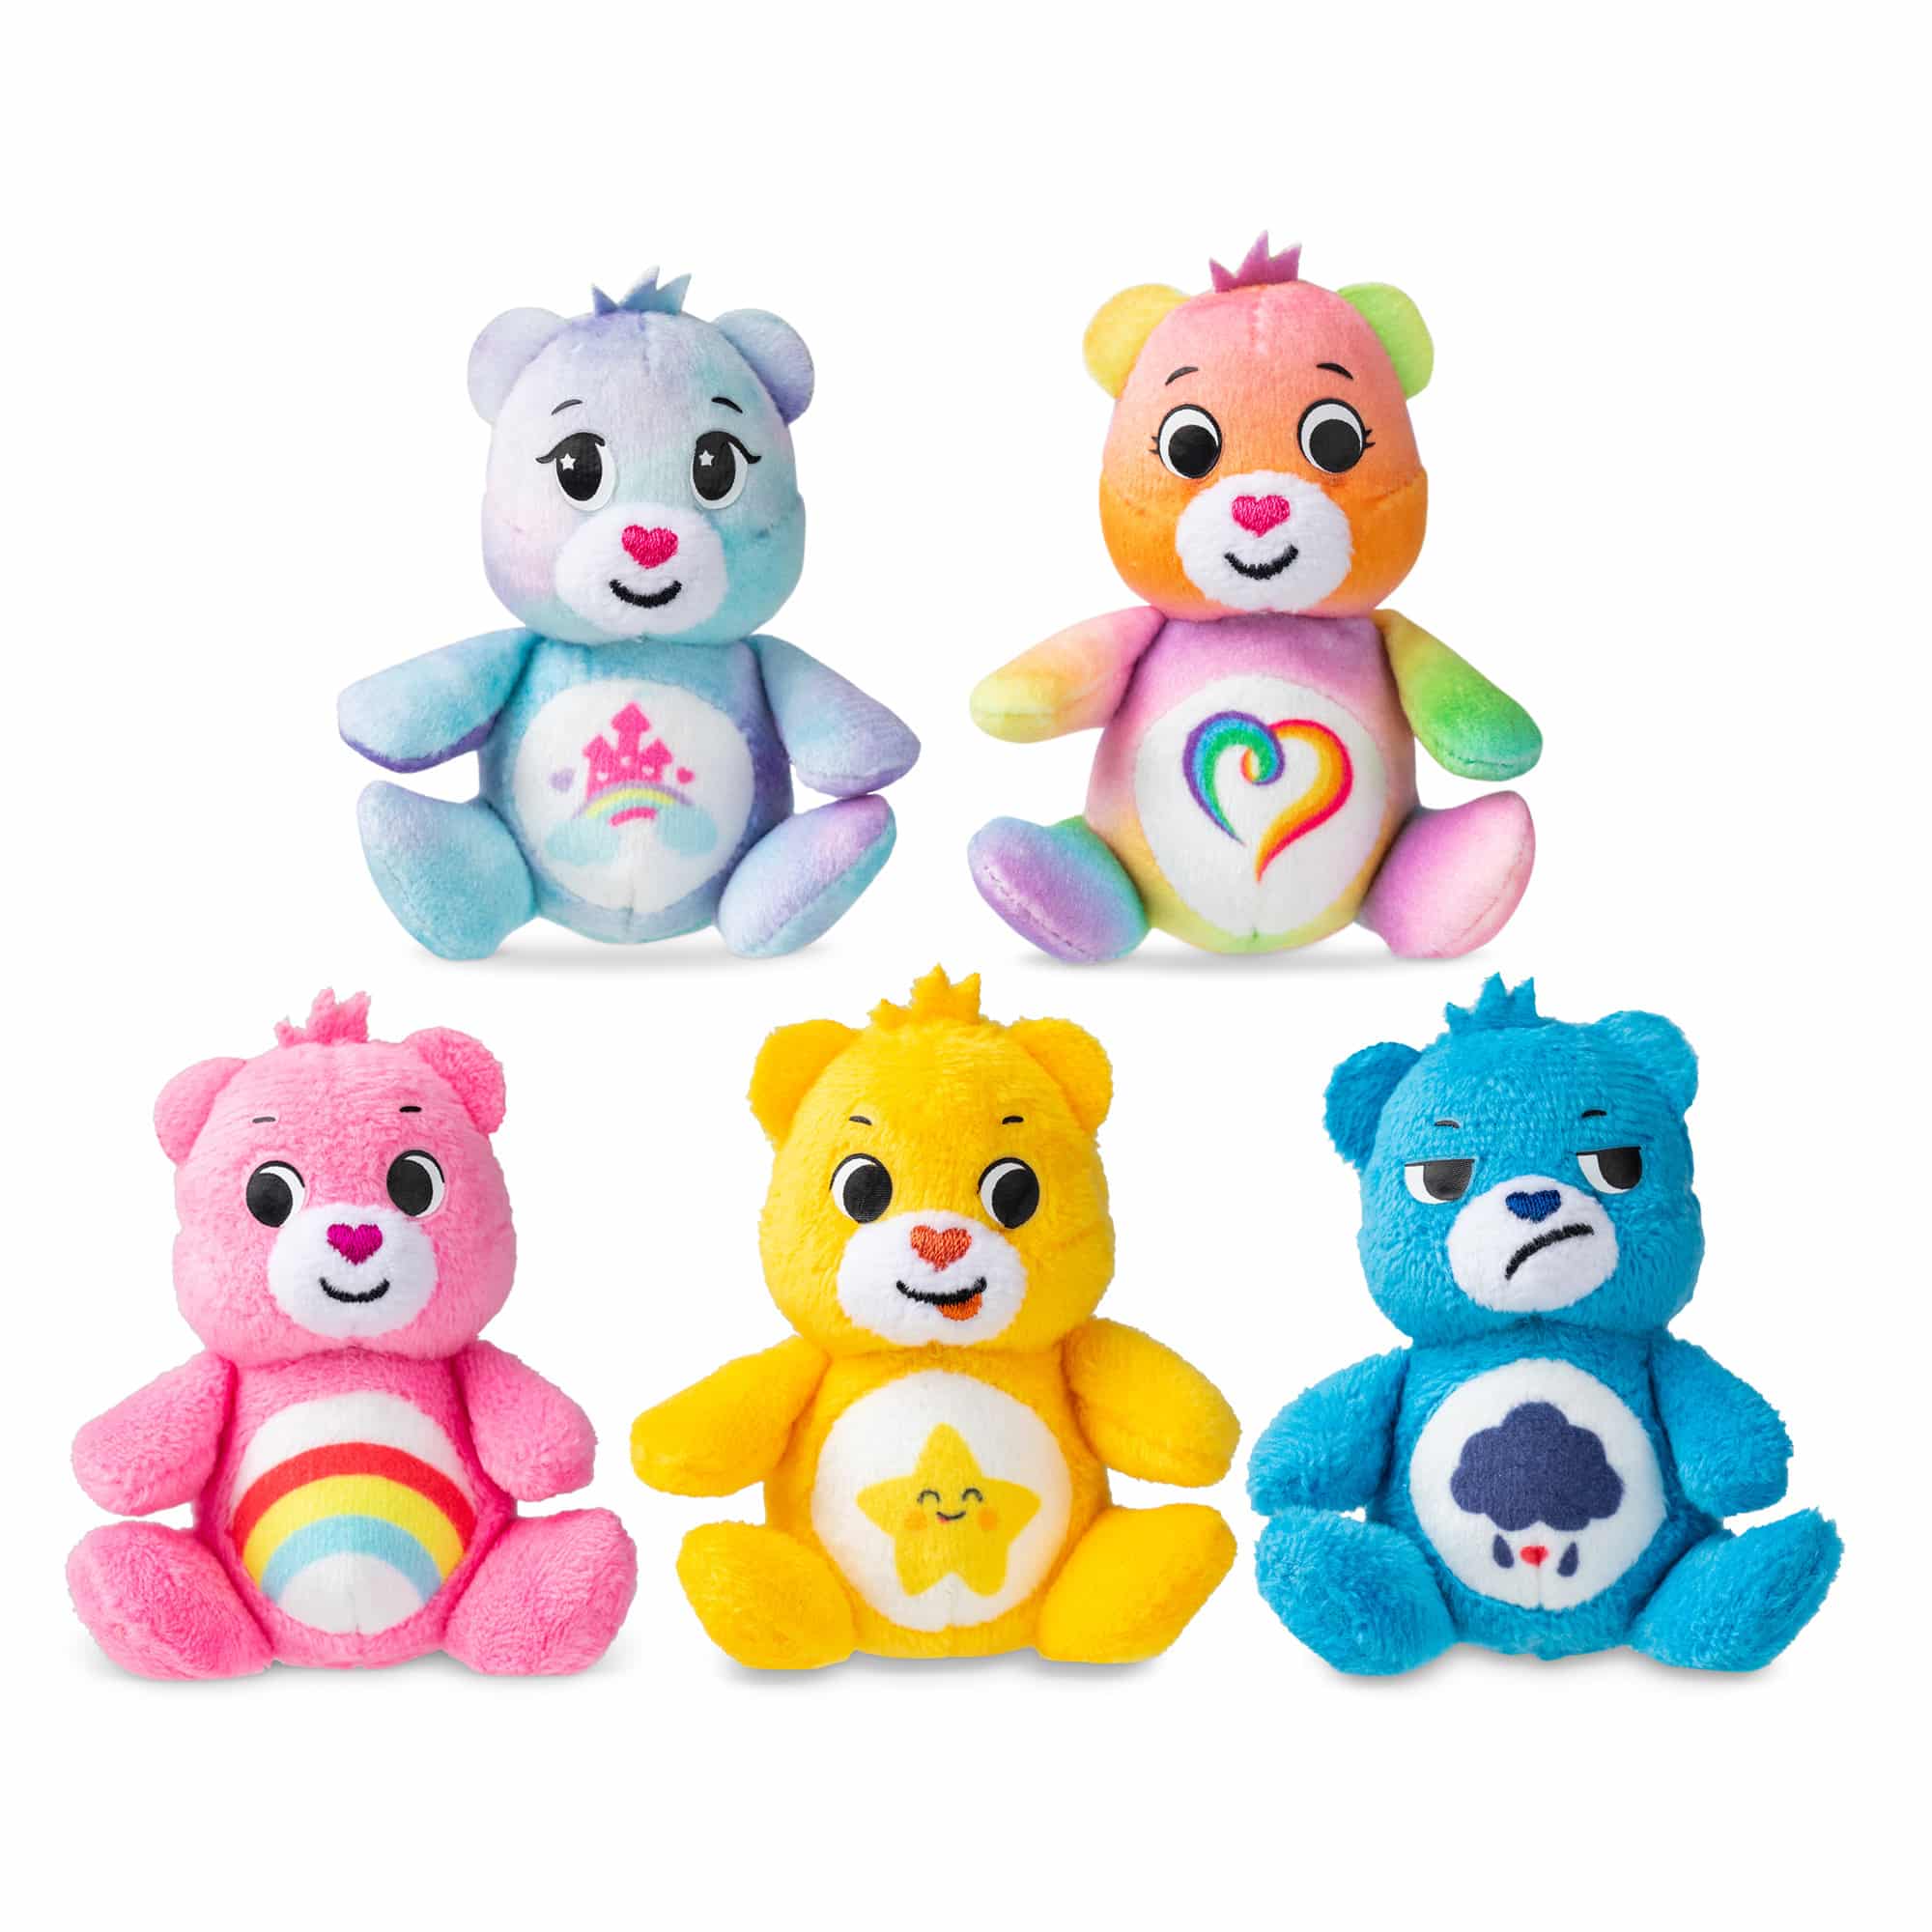 All 5 Care Bear micro plushies